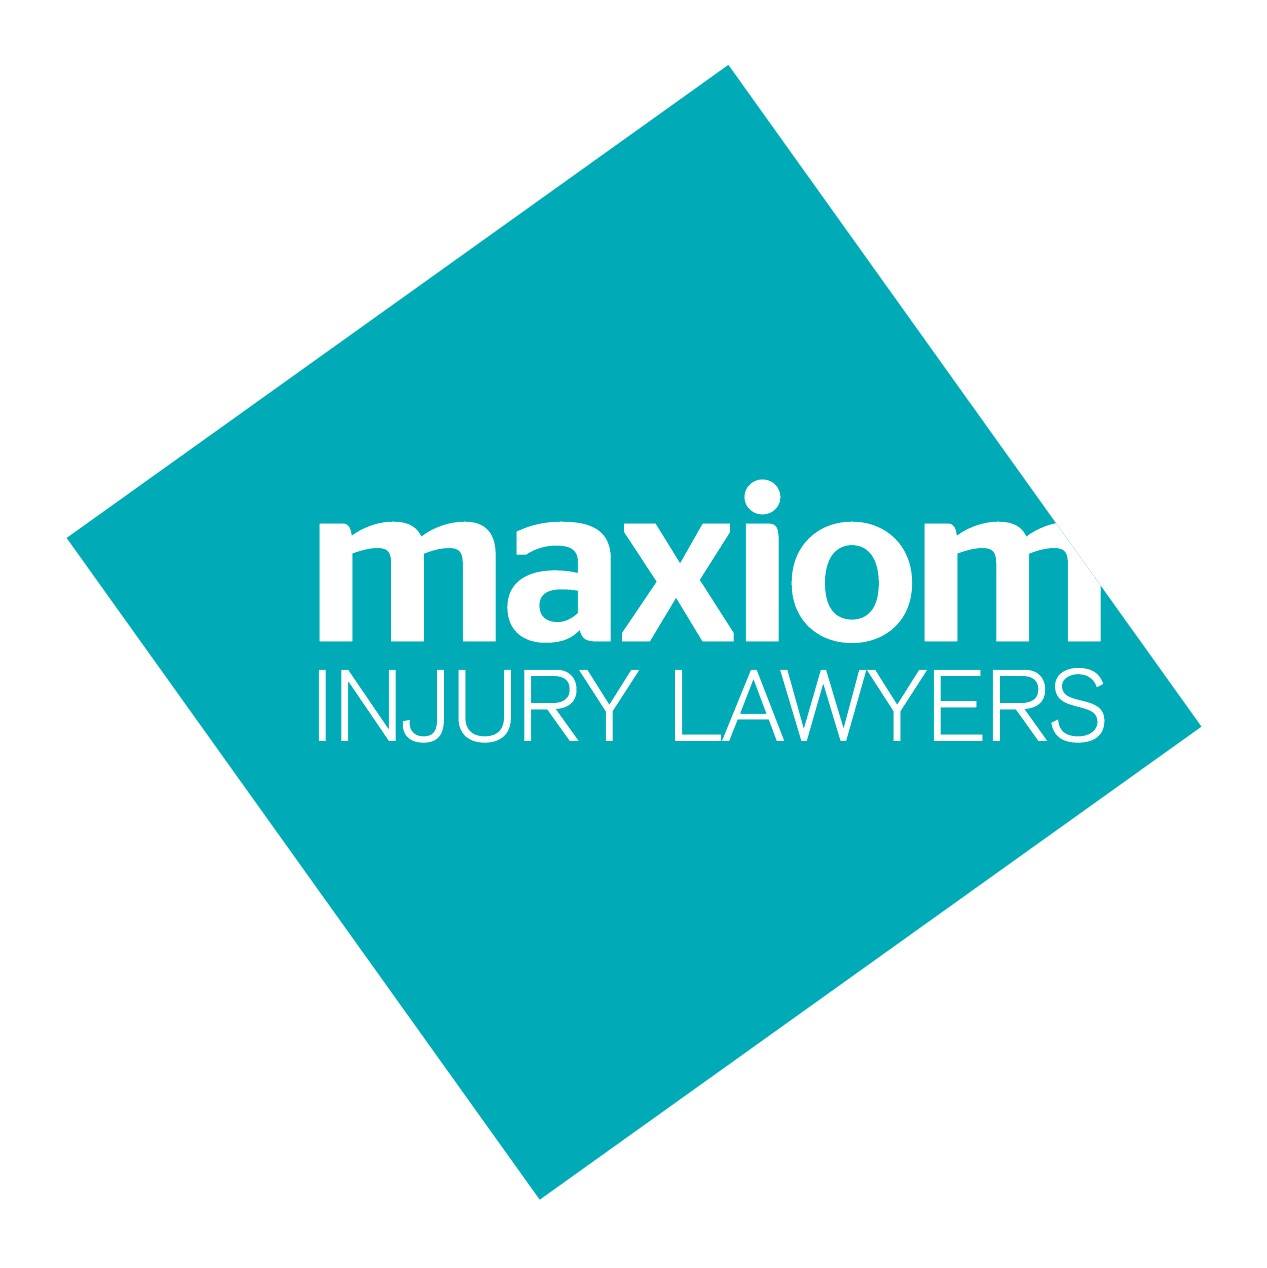 Personal Injury Lawyers Melbourne - Maxiom Law